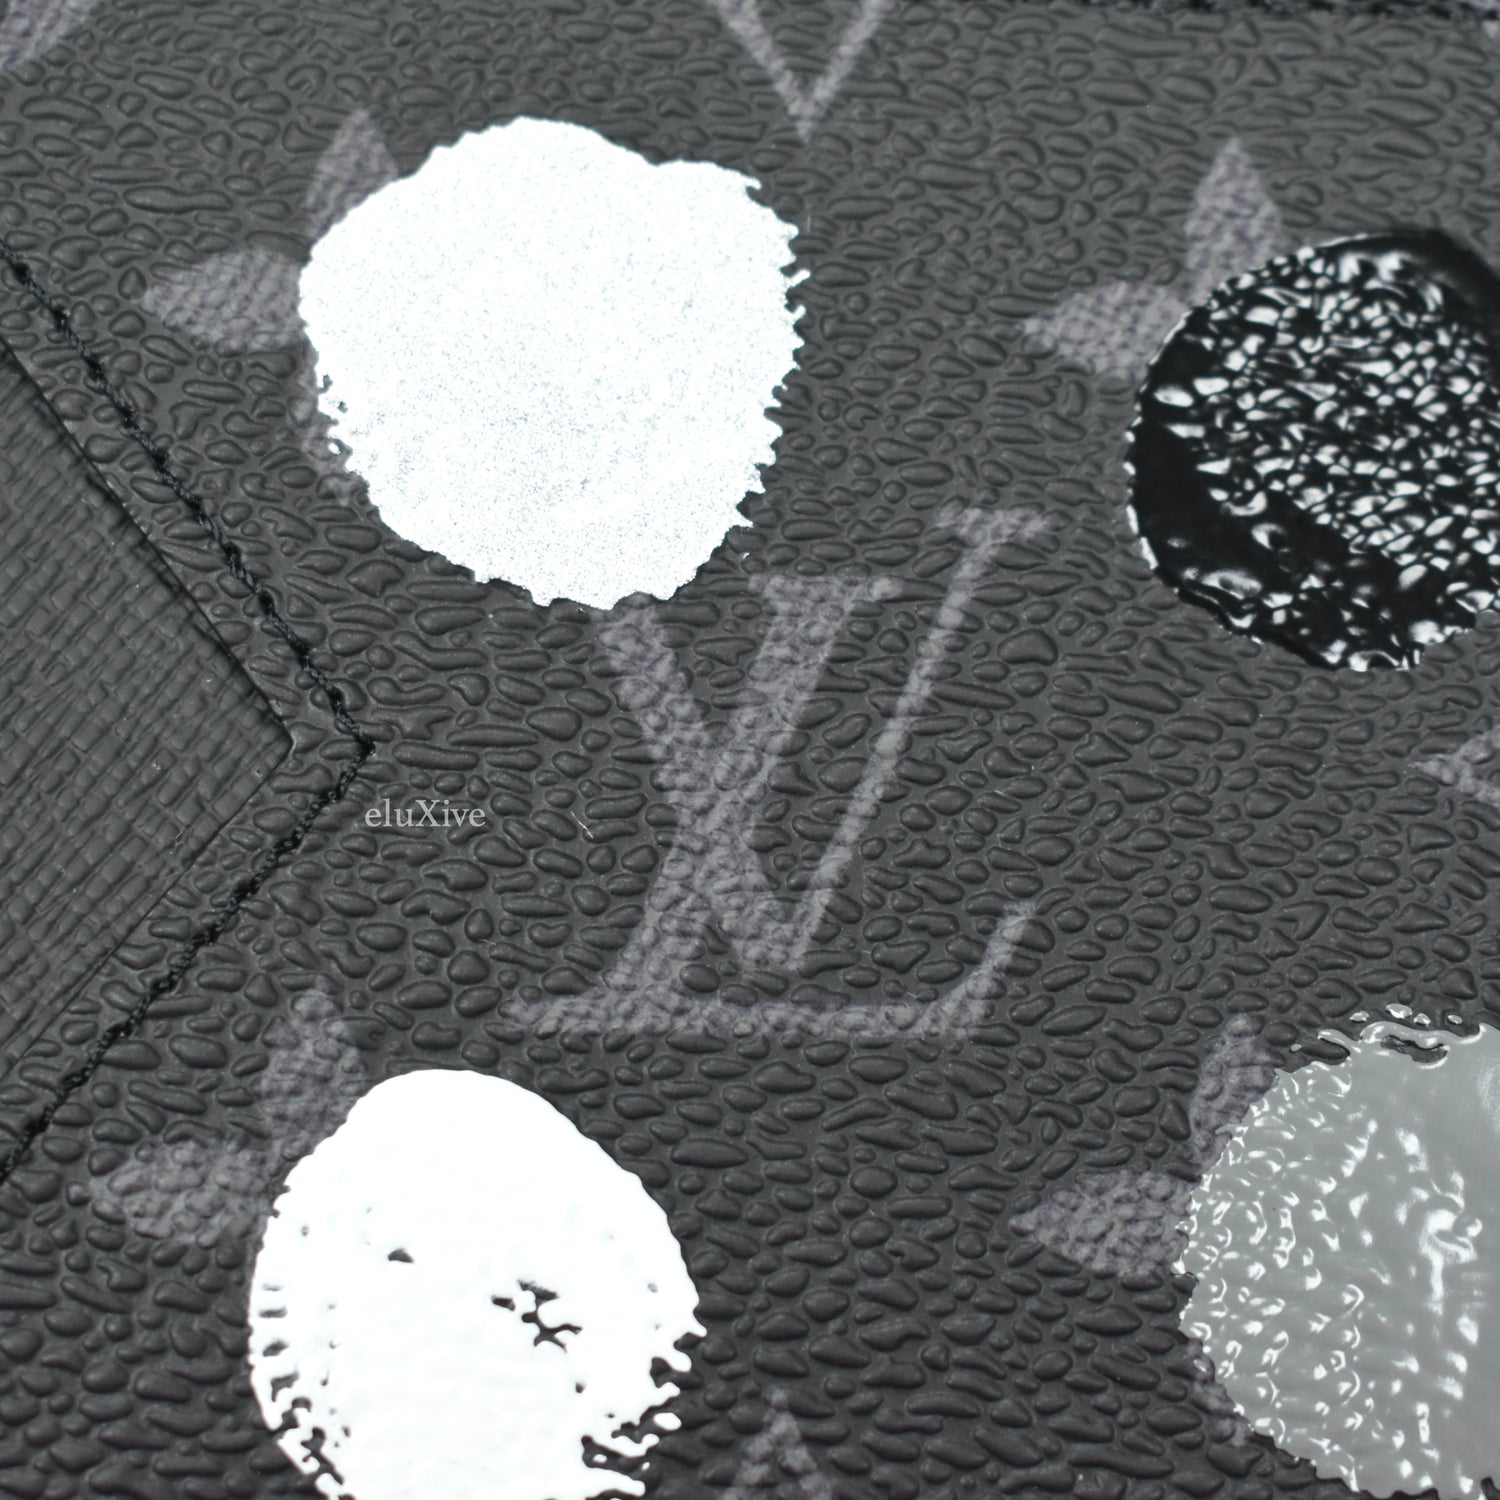 Louis Vuitton Yayoi Kusama Monogram Eclipse Coin Card Holder Zip Auction